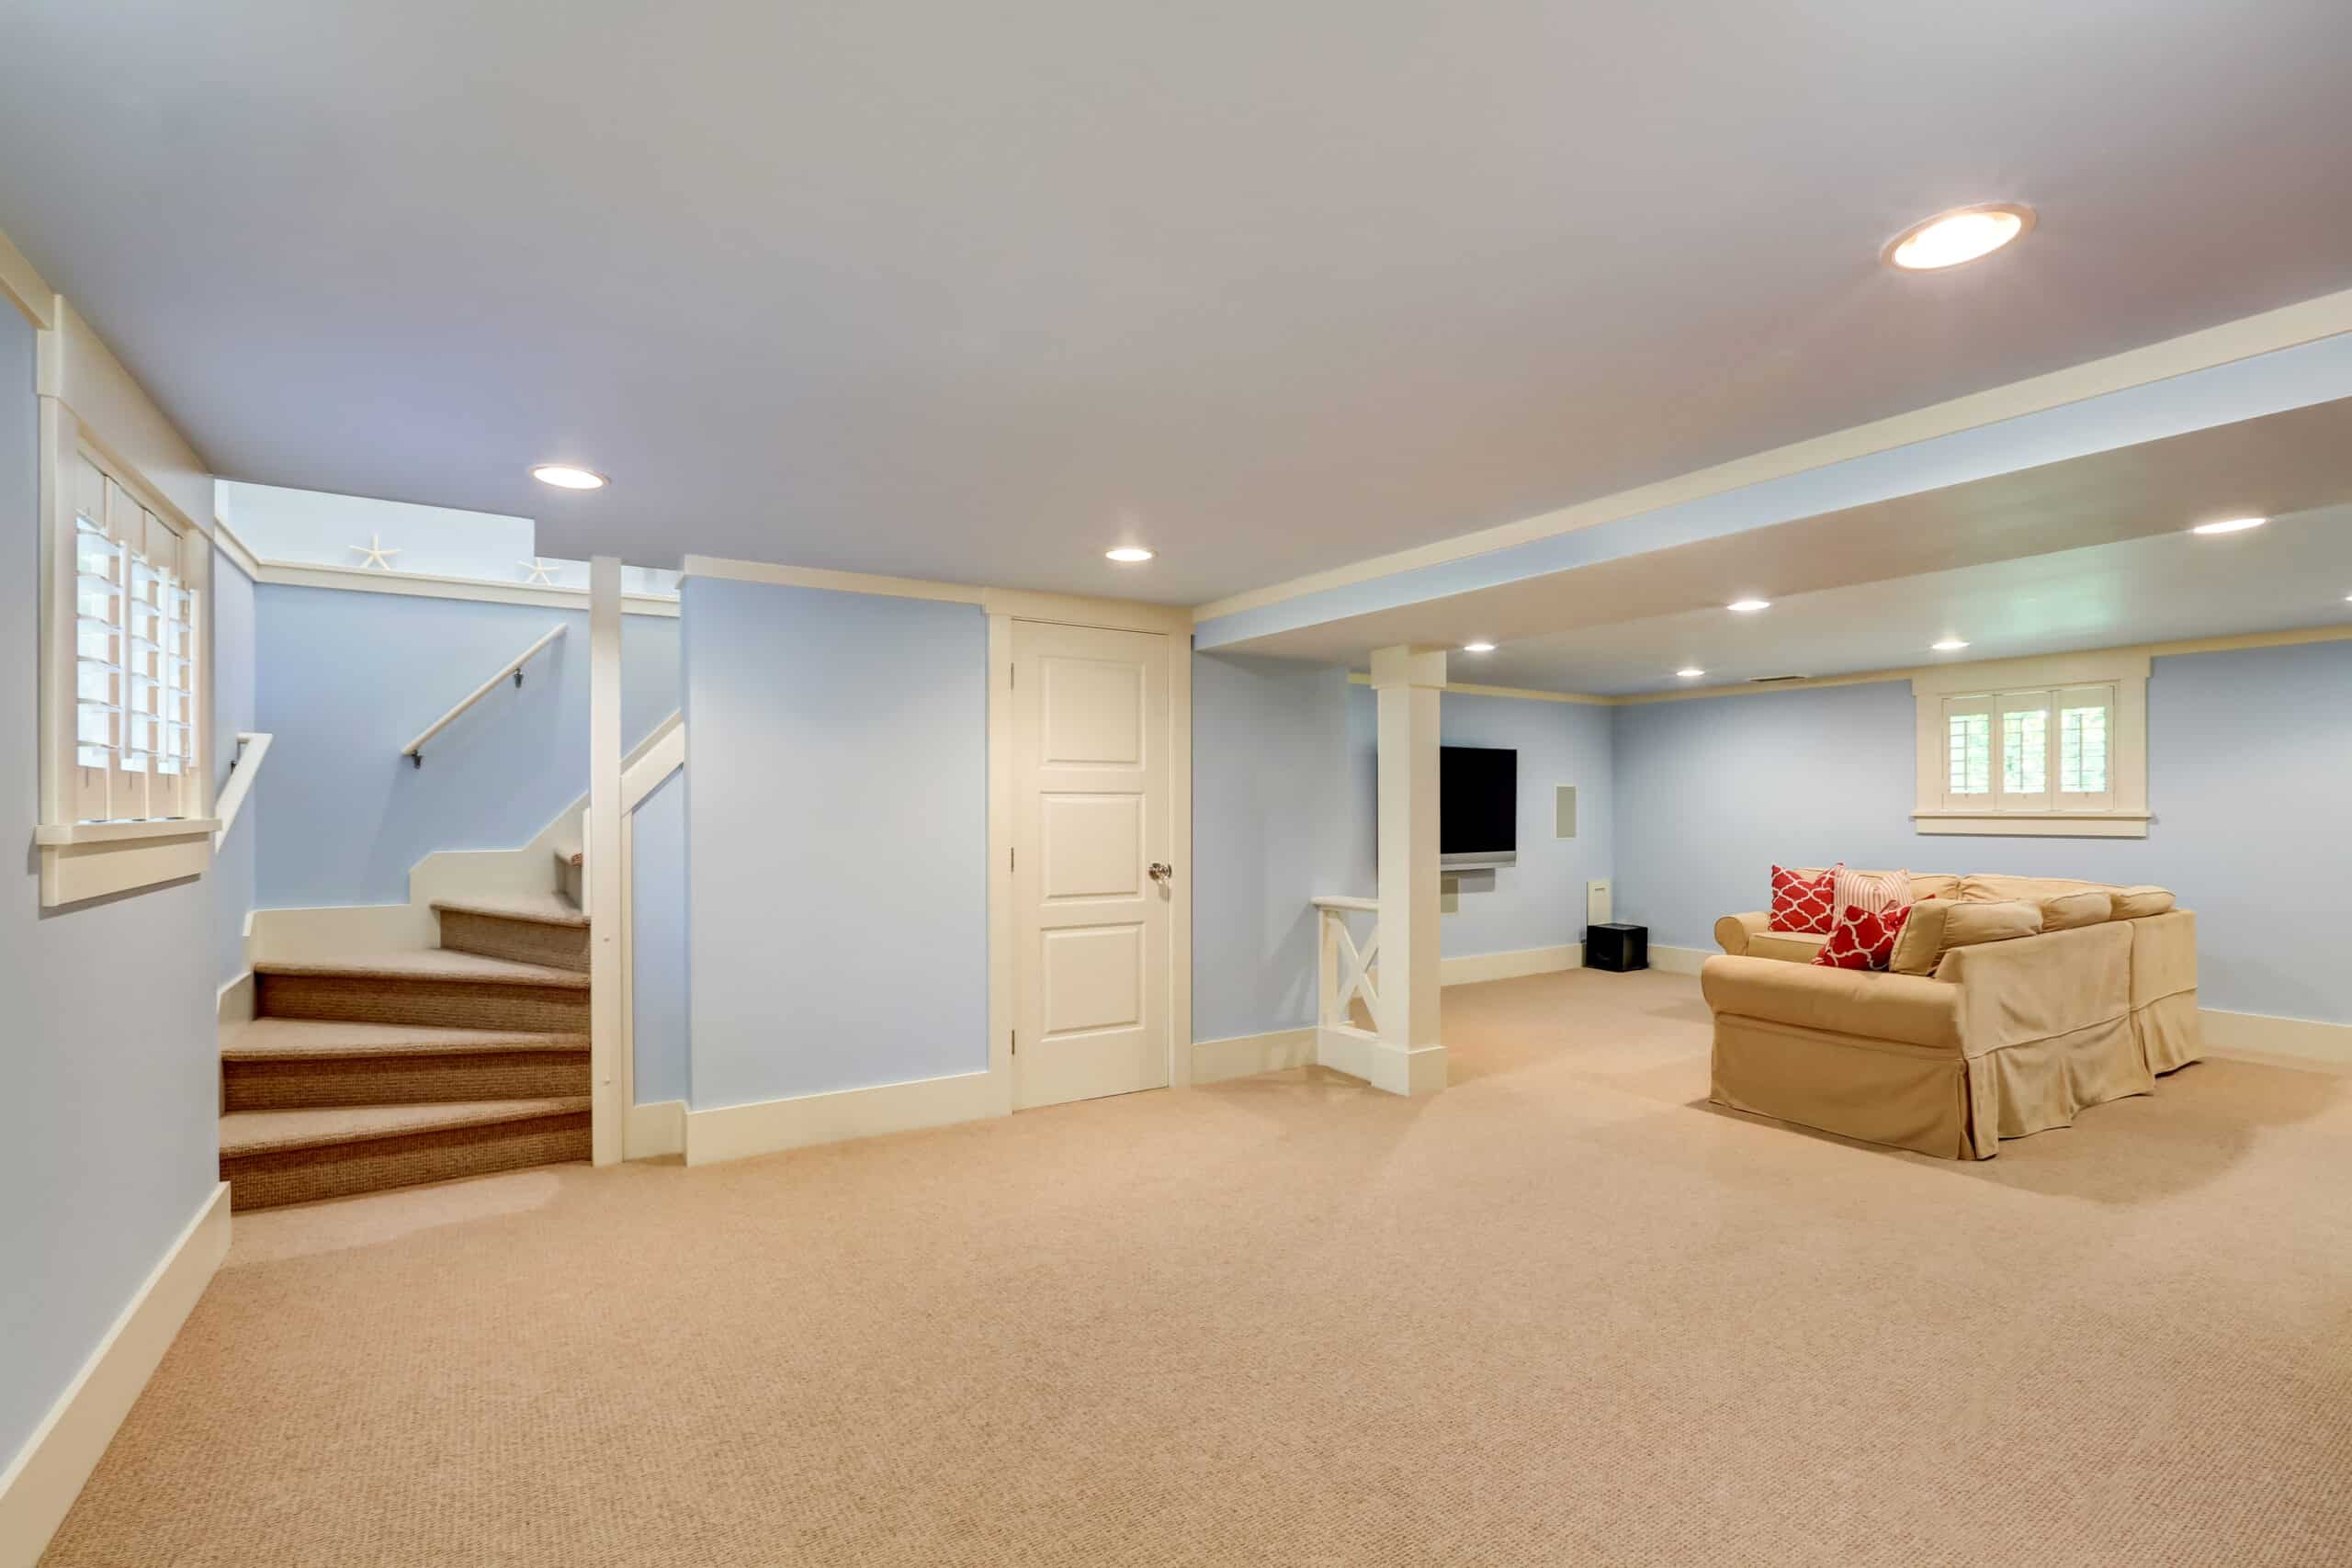 Spacious basement room interior in pastel blue tones. Beige carpet floor and large corner sofa with TV.